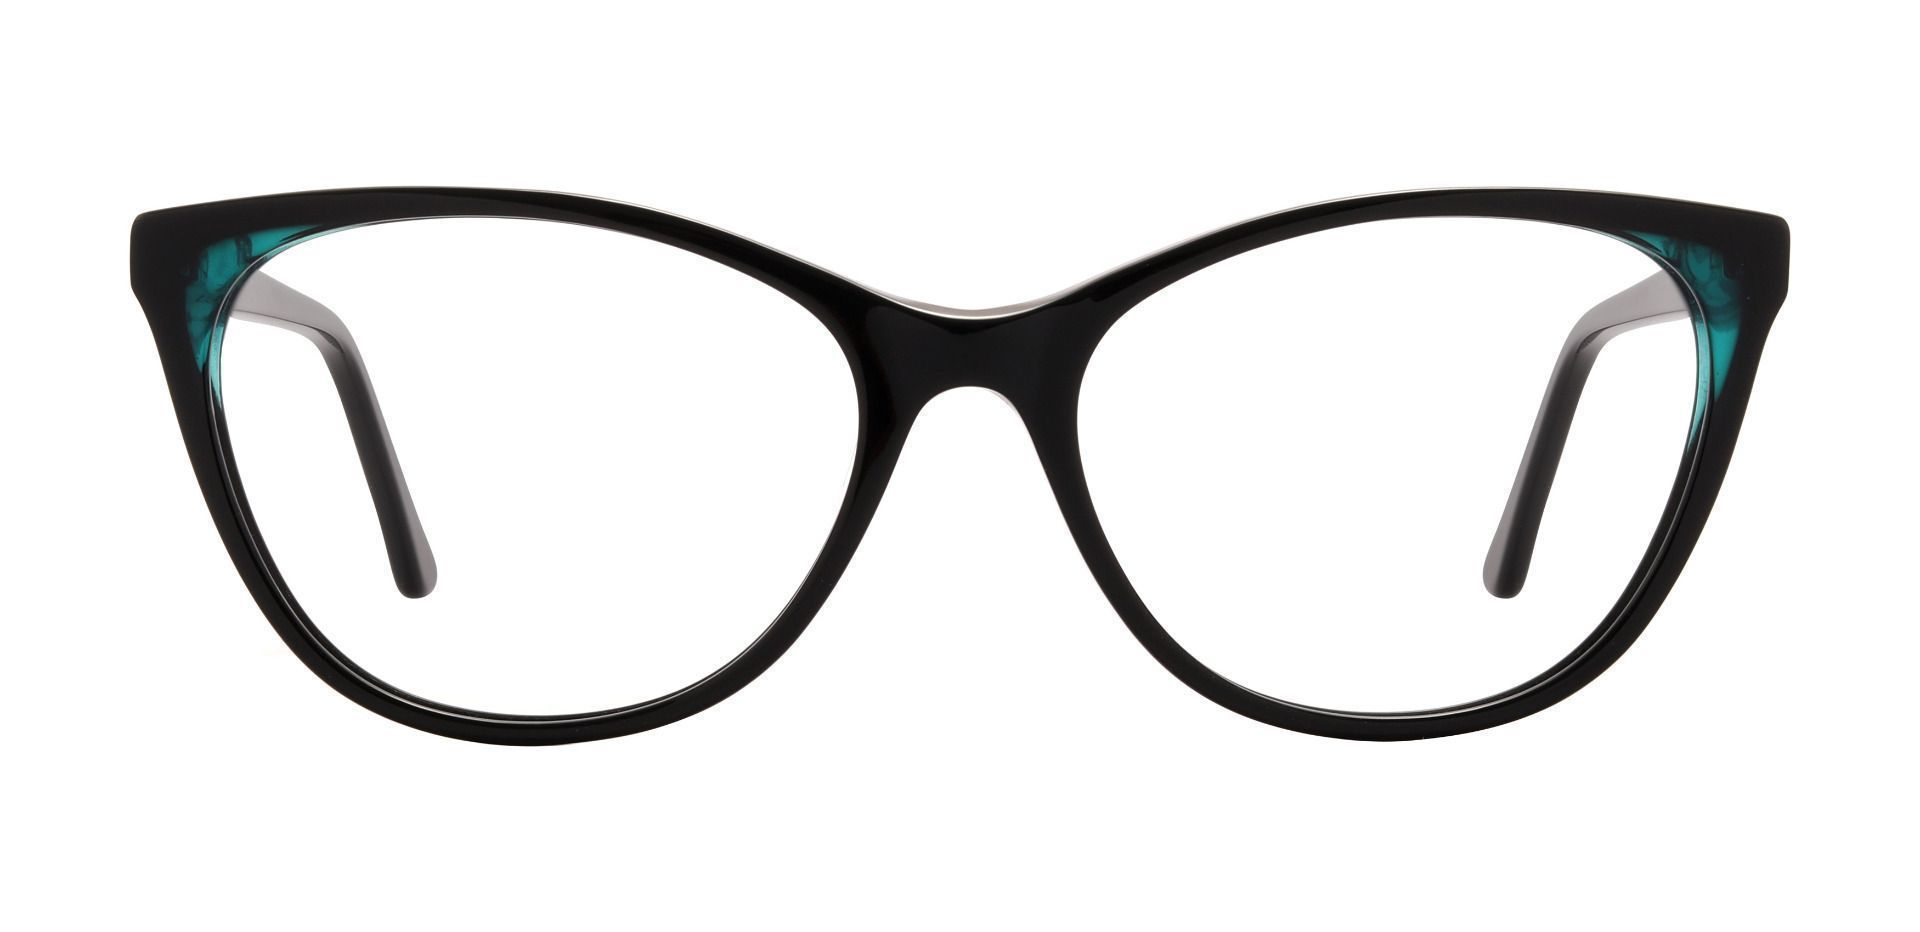 Huffman Cat Eye Prescription Glasses - Black